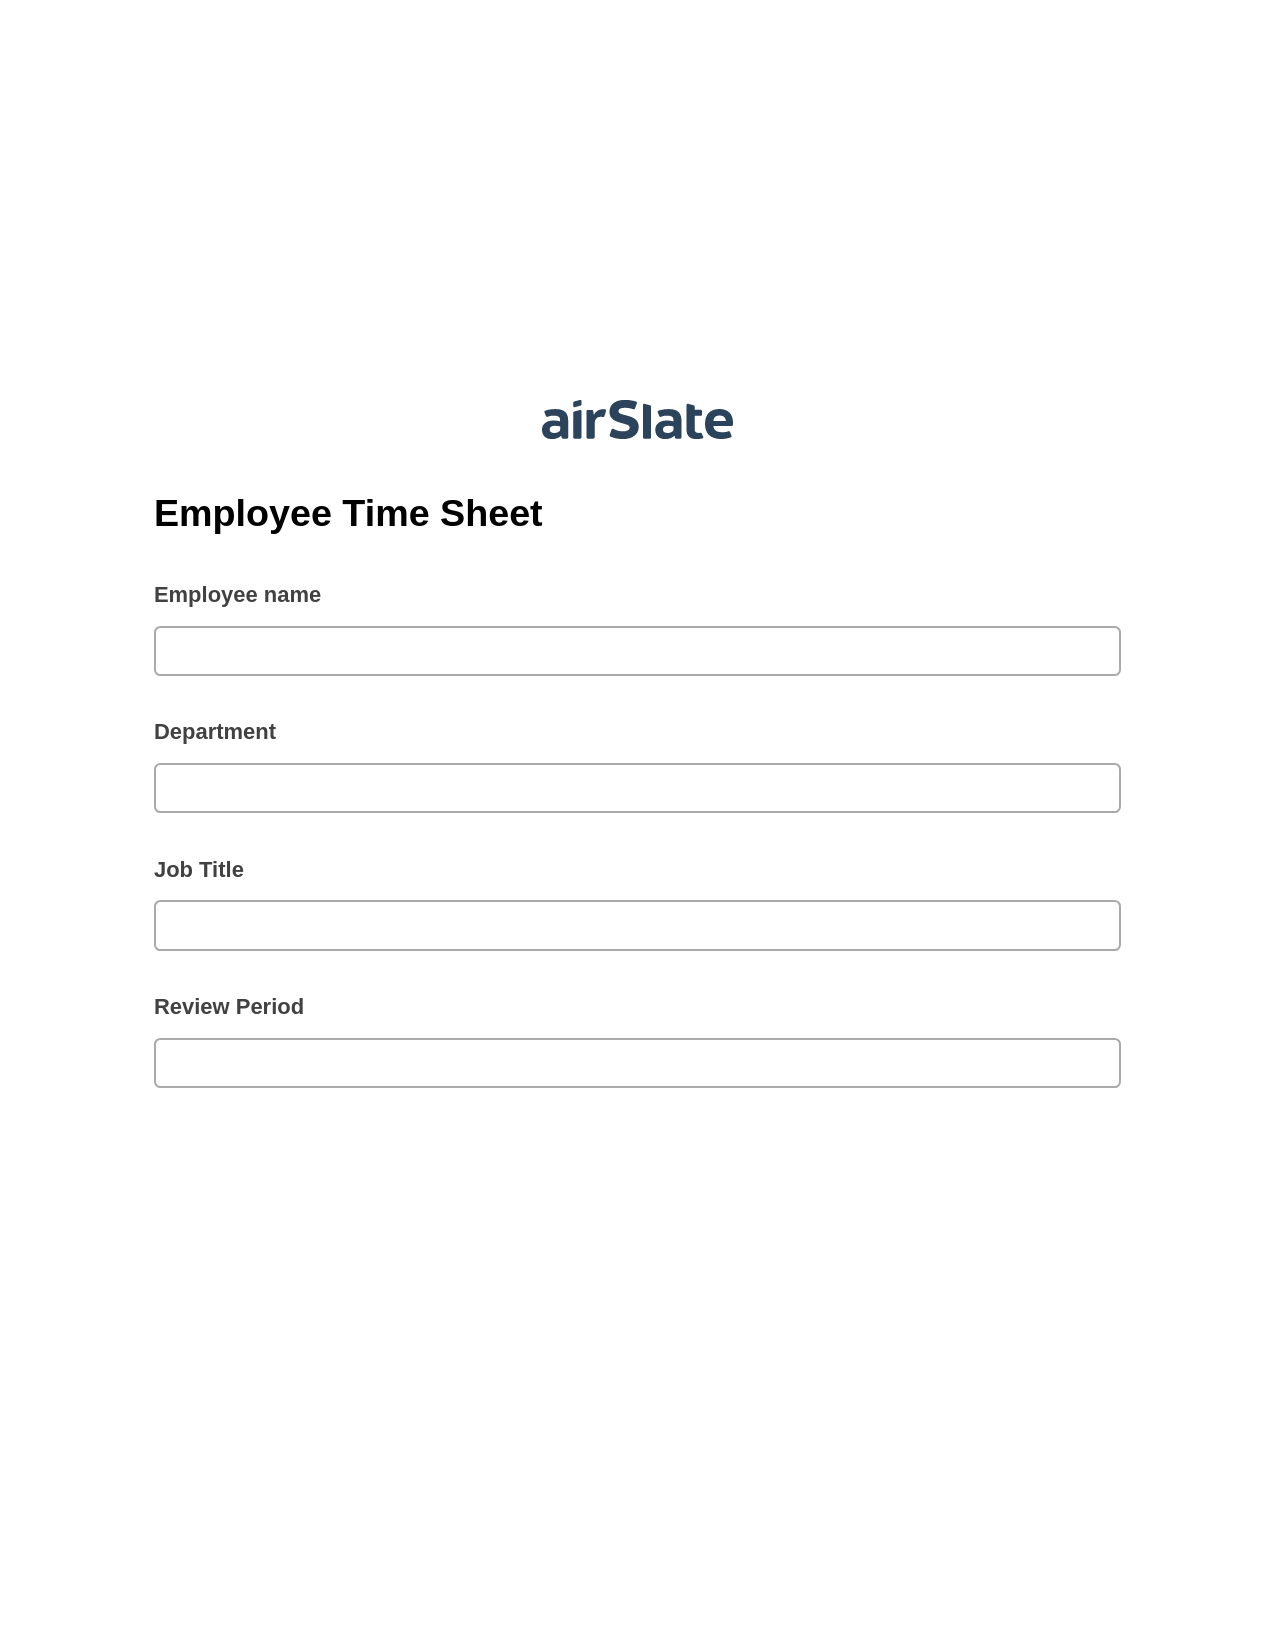 Employee Time Sheet Pre-fill from Salesforce Records Bot, Create Salesforce Records Bot, Export to WebMerge Bot